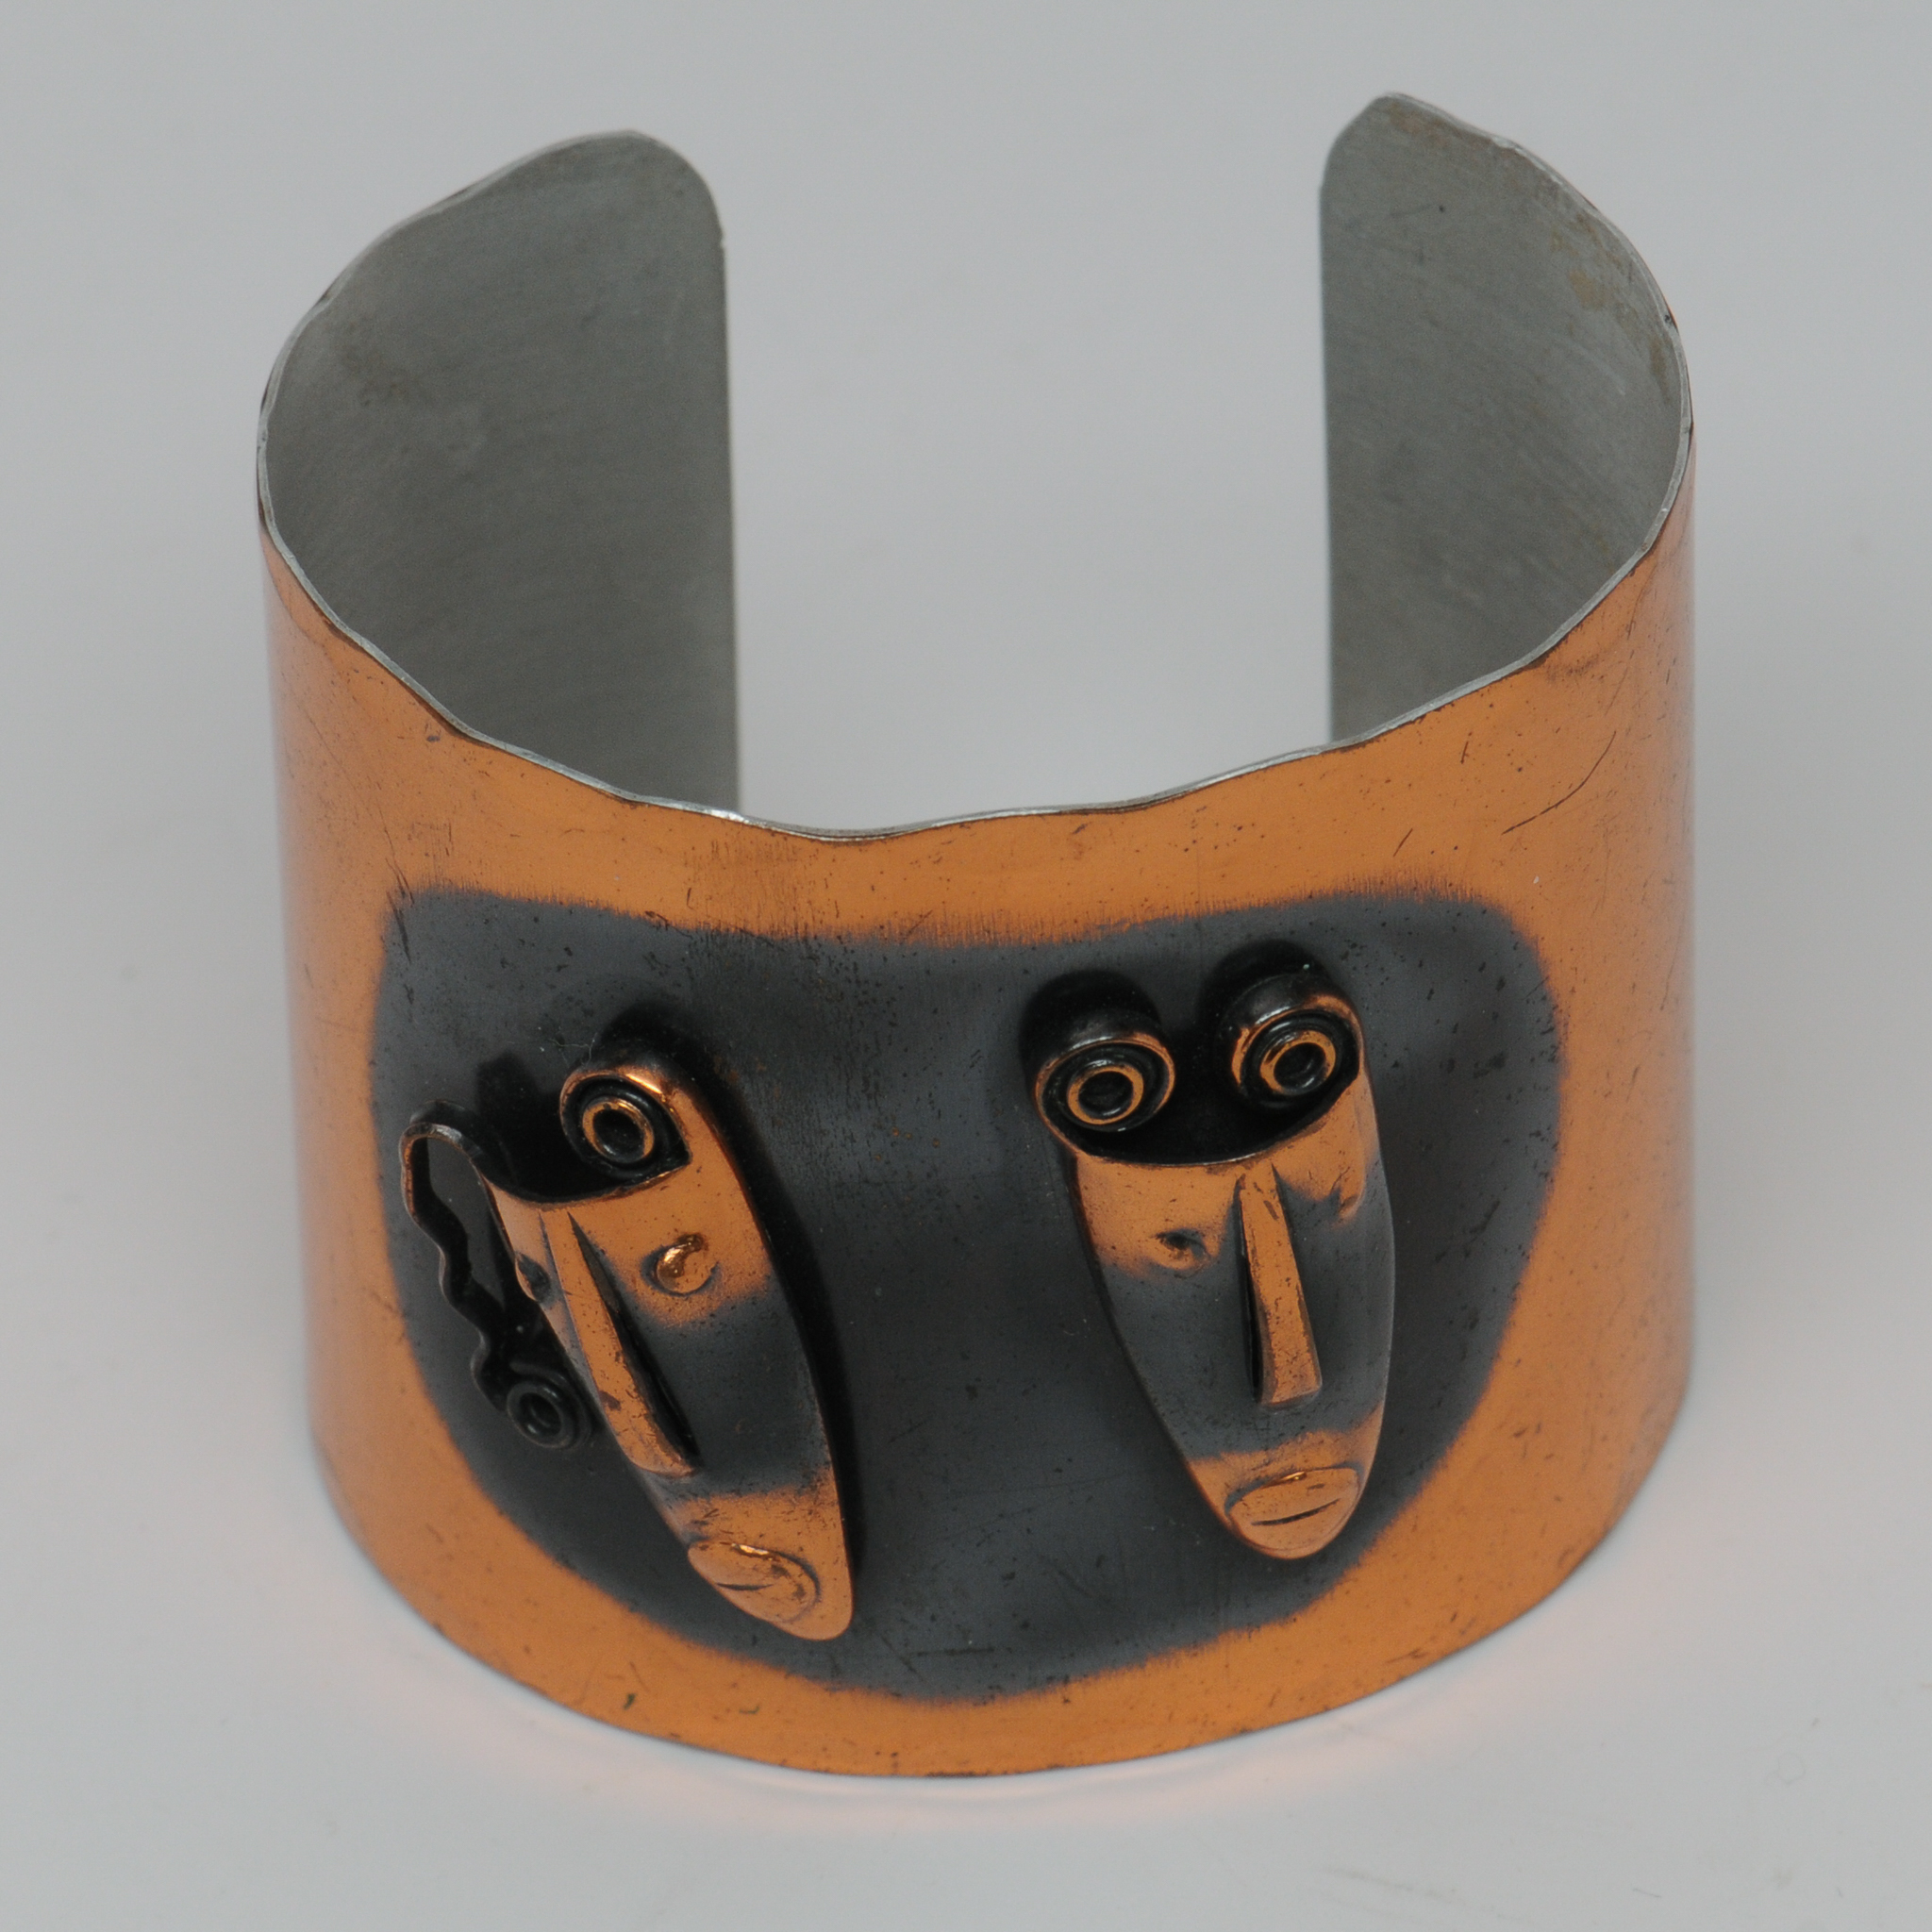 Rebajes+Brazilian+Tribal+Masks+Solid+Copper+Cuff+Bracelet picture 1